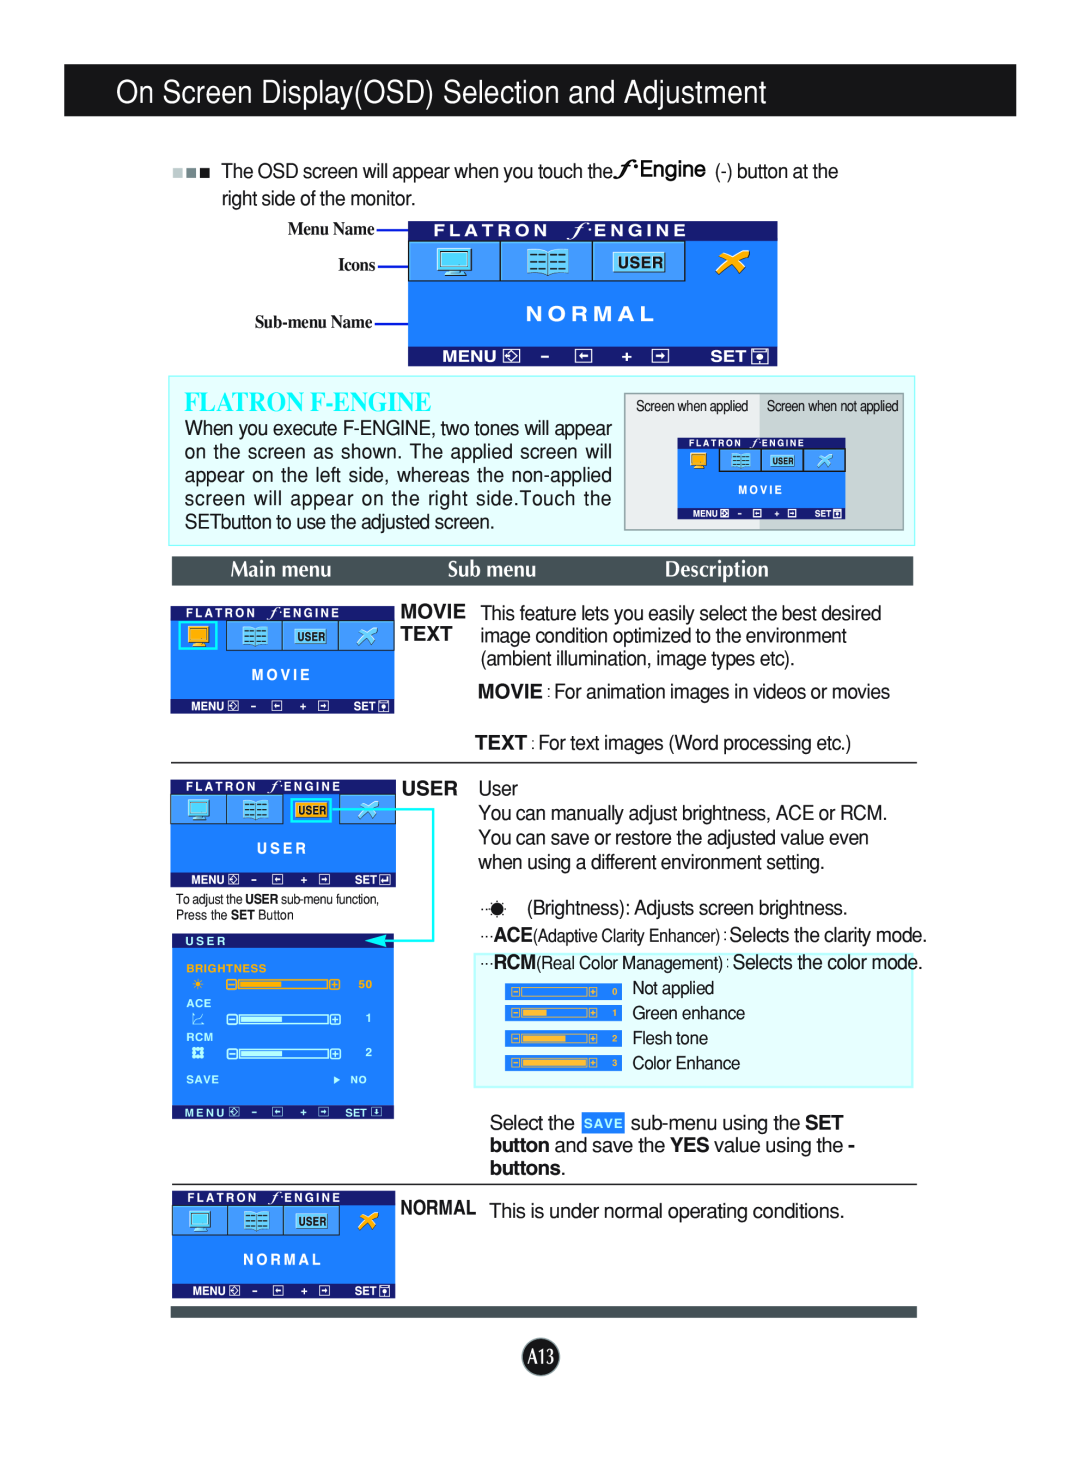 LG Electronics L1940B On Screen DisplayOSD Selection and Adjustment, Flatron F-Engine, Main menu, Sub menu, Description 